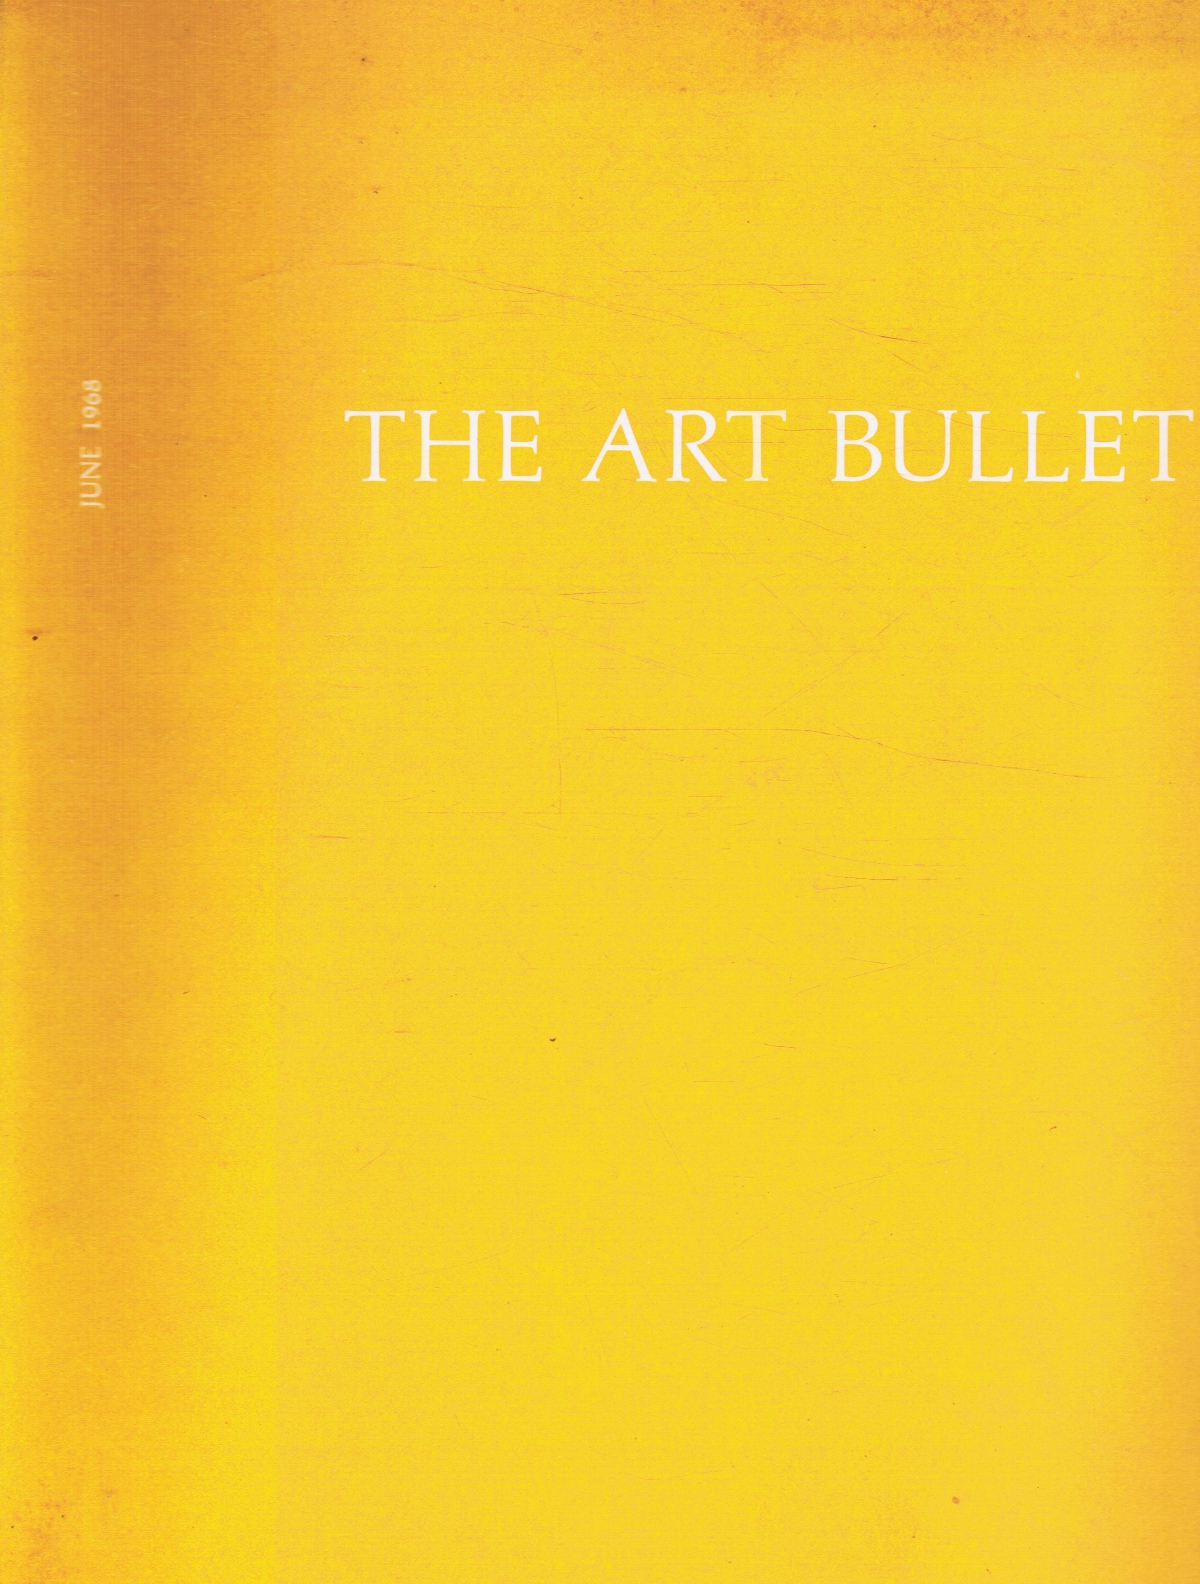 POSNER, DONALD (EDITOR) - The Art Bulletin: June 1968, Volume L, Number Two